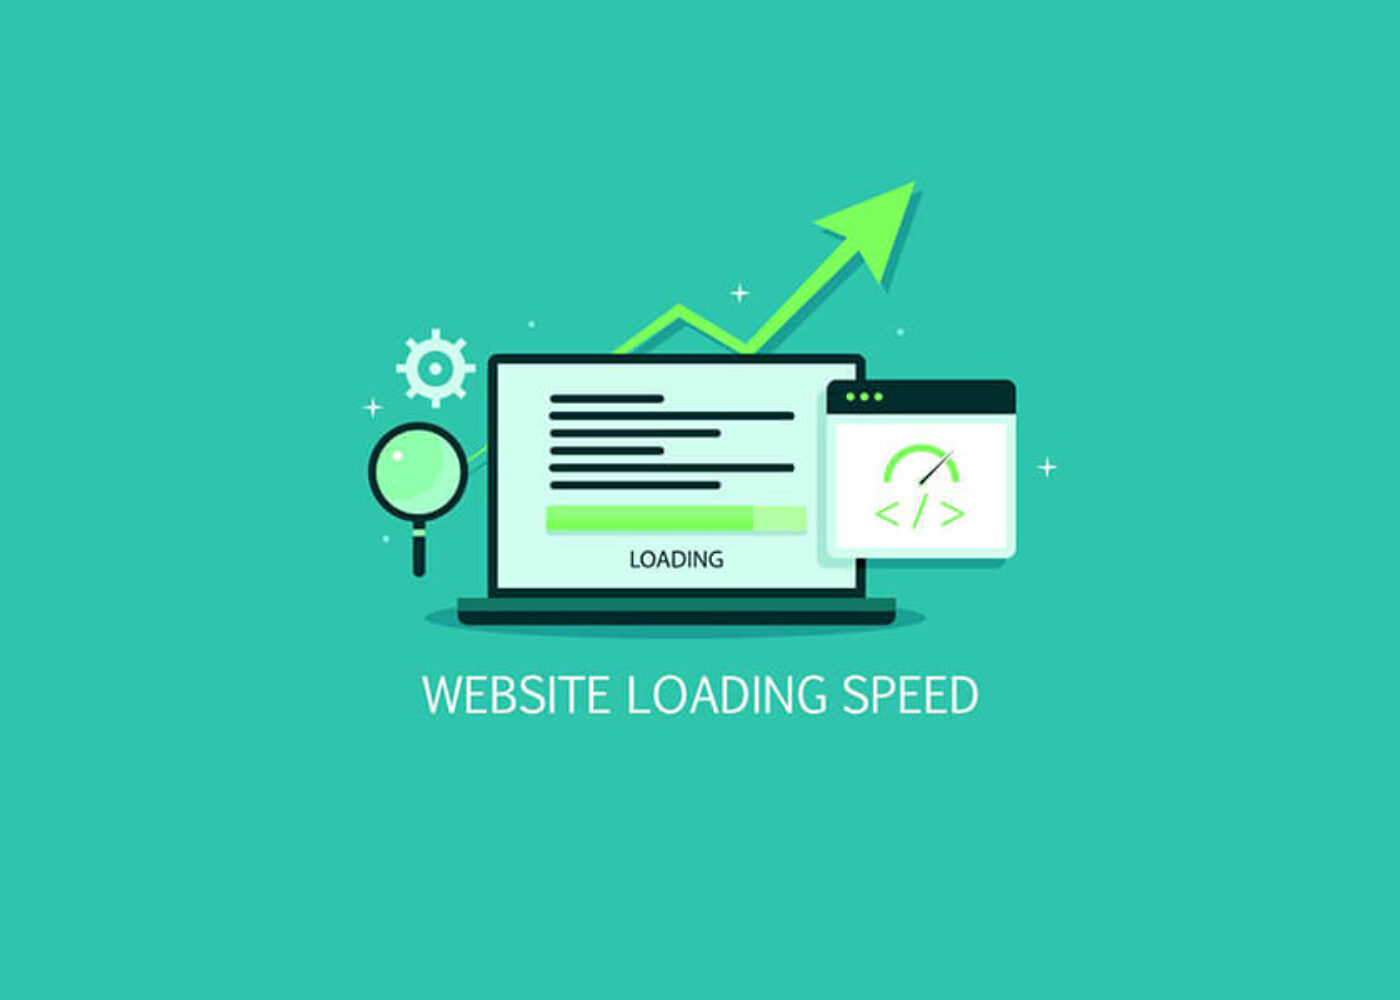 Focus on website speed